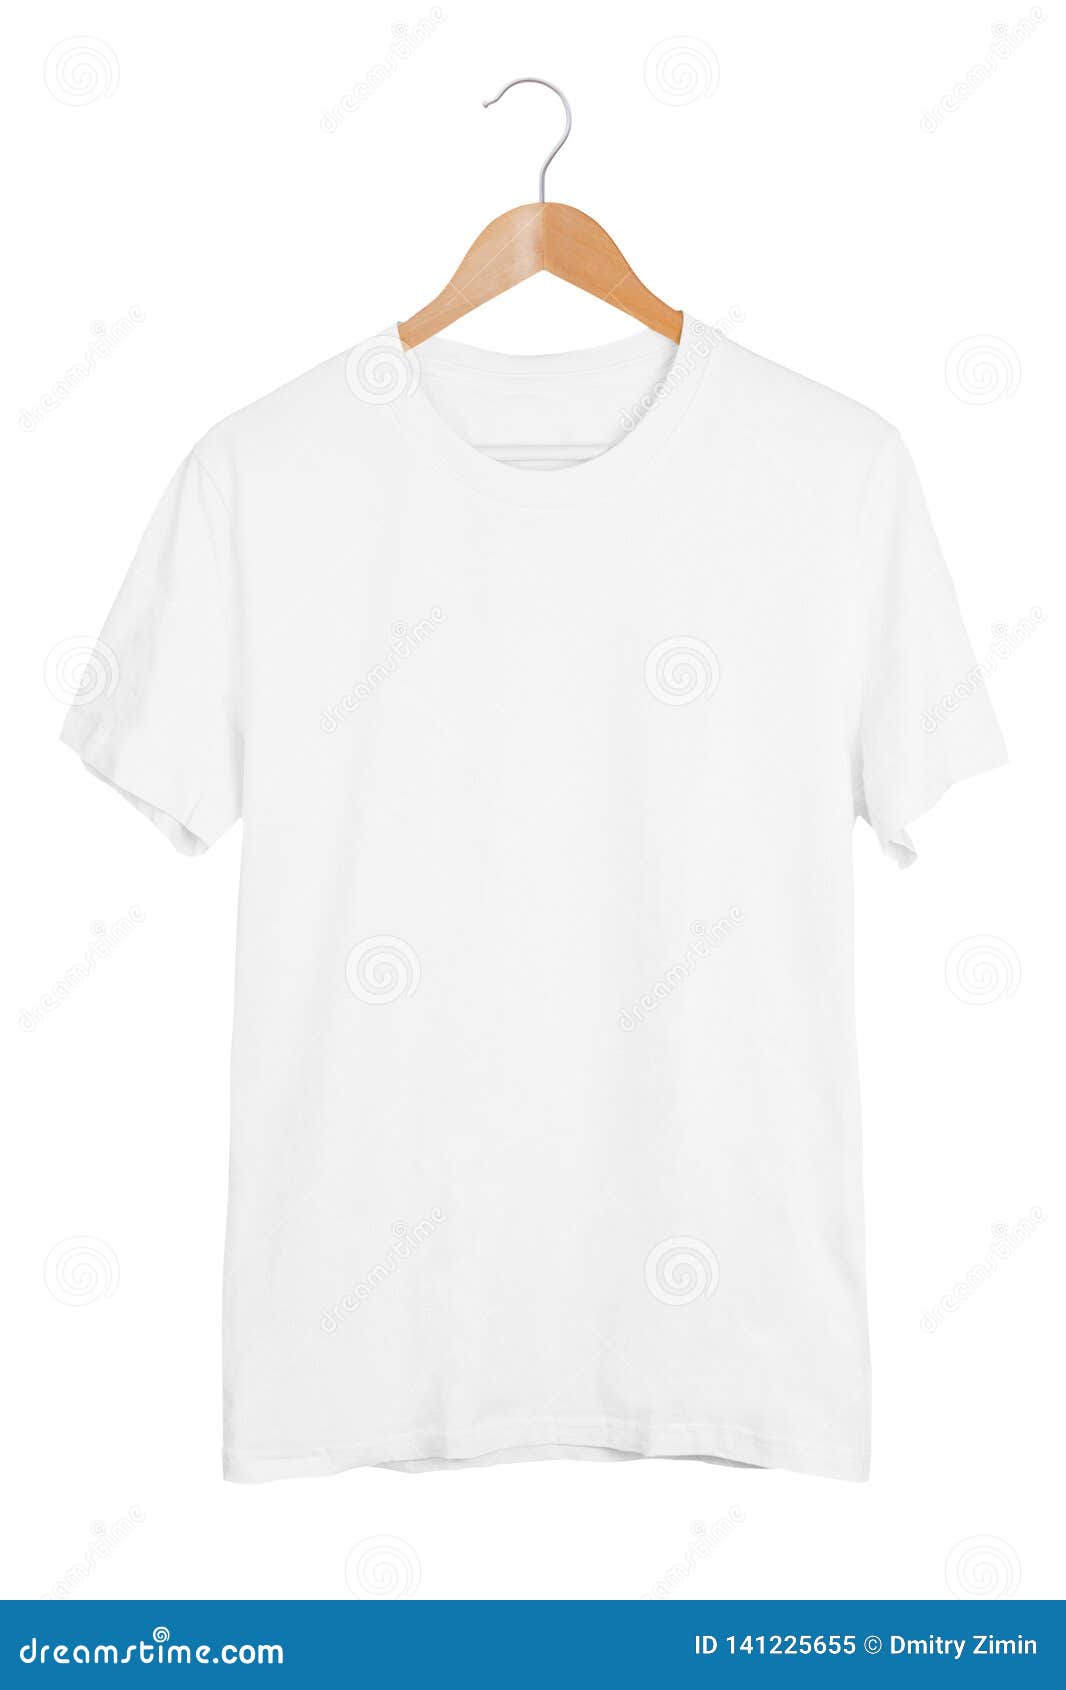 Blank White T-shirt on Wooden Hanger Isolated on White Background Stock  Image - Image of apparel, plain: 141225655